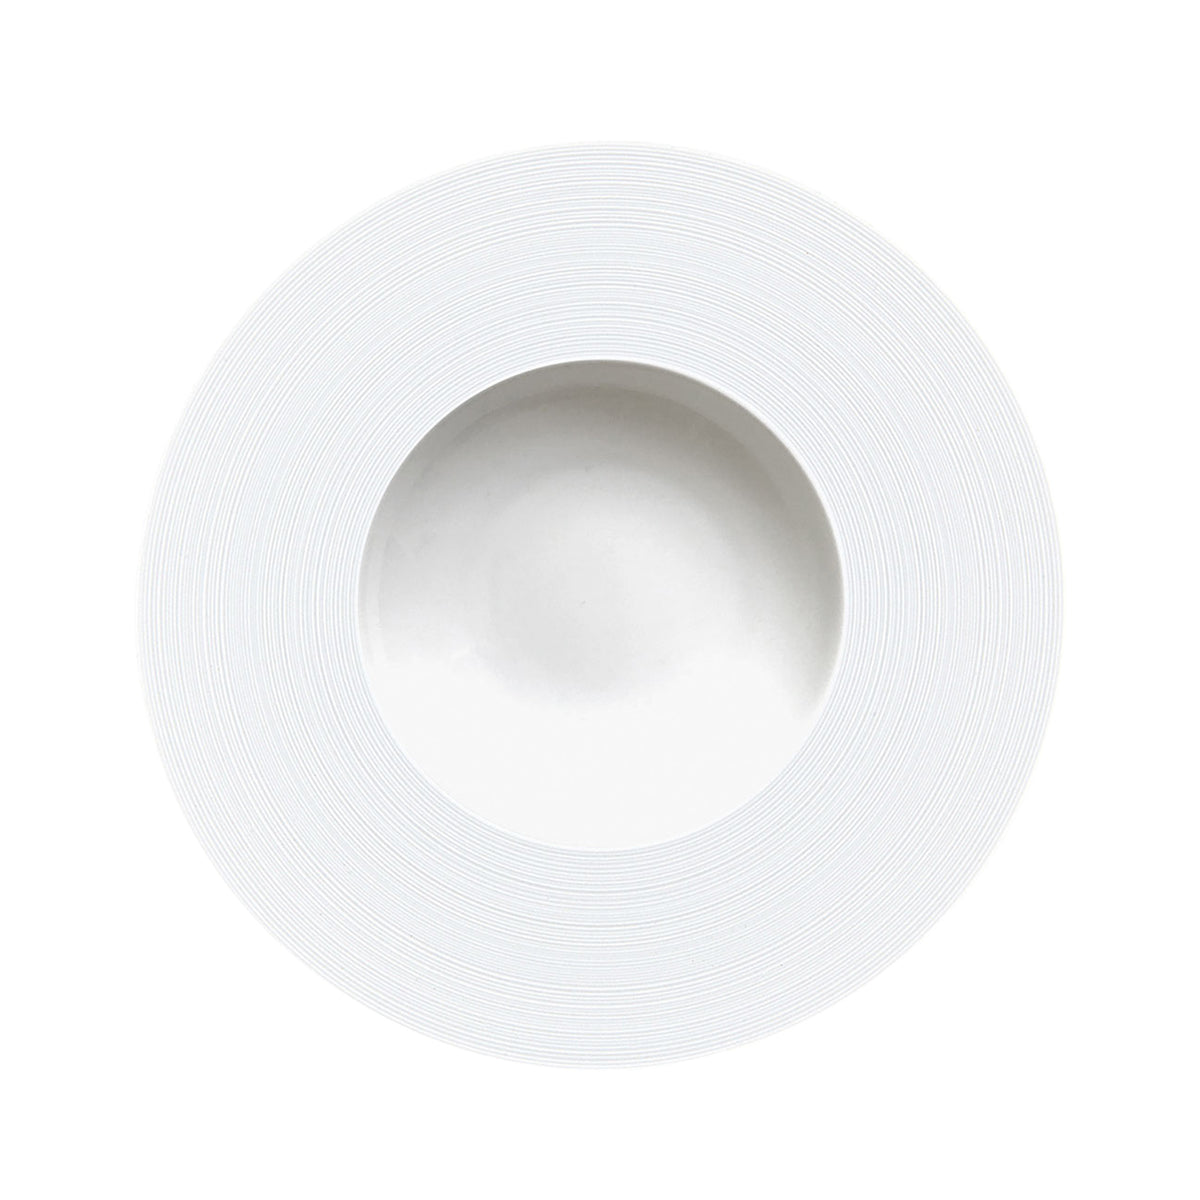 HEMISPHERE White Satin - JDC rim soup plate